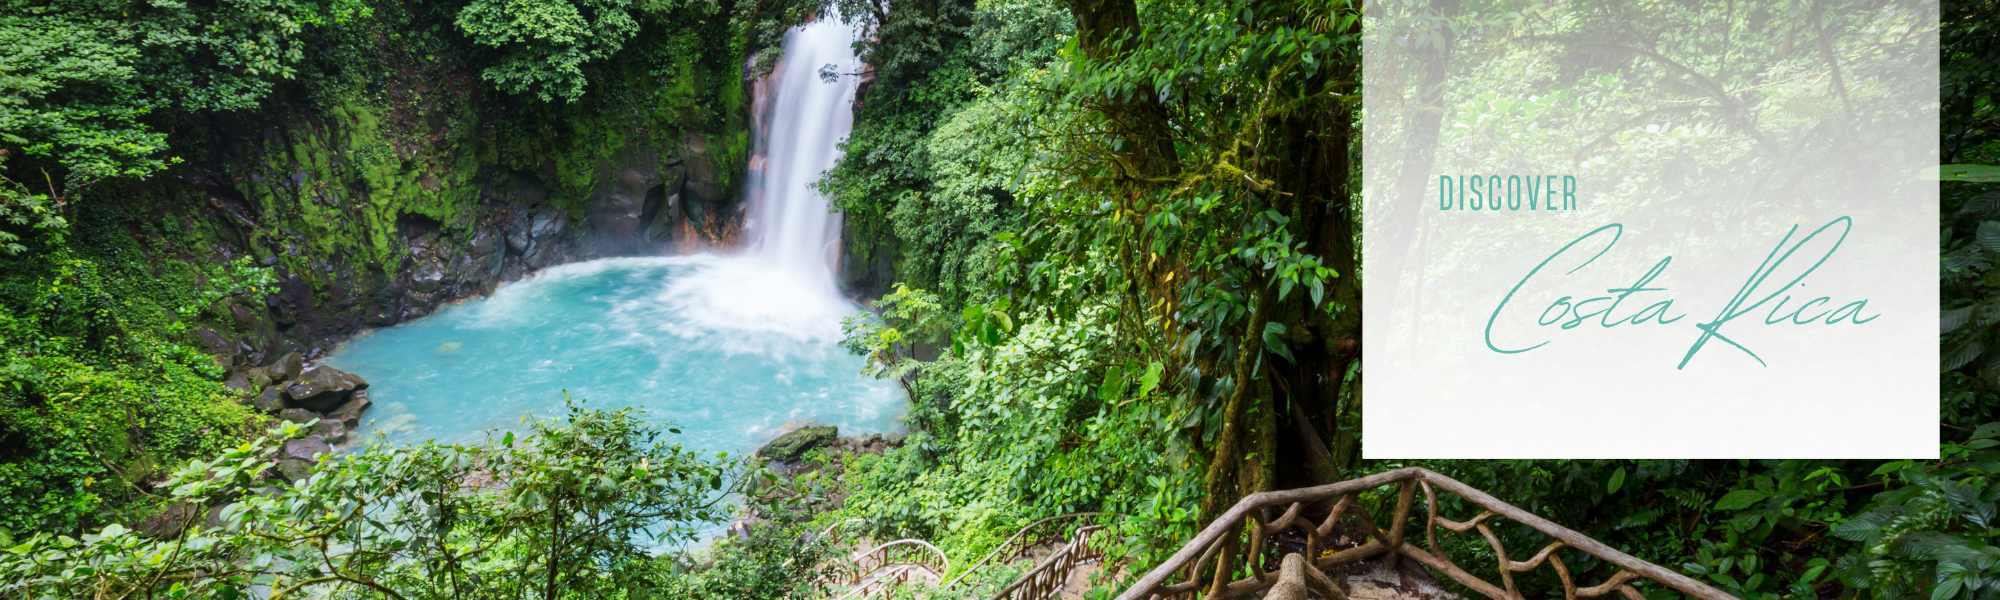 waterfall in the jungle of costa rica